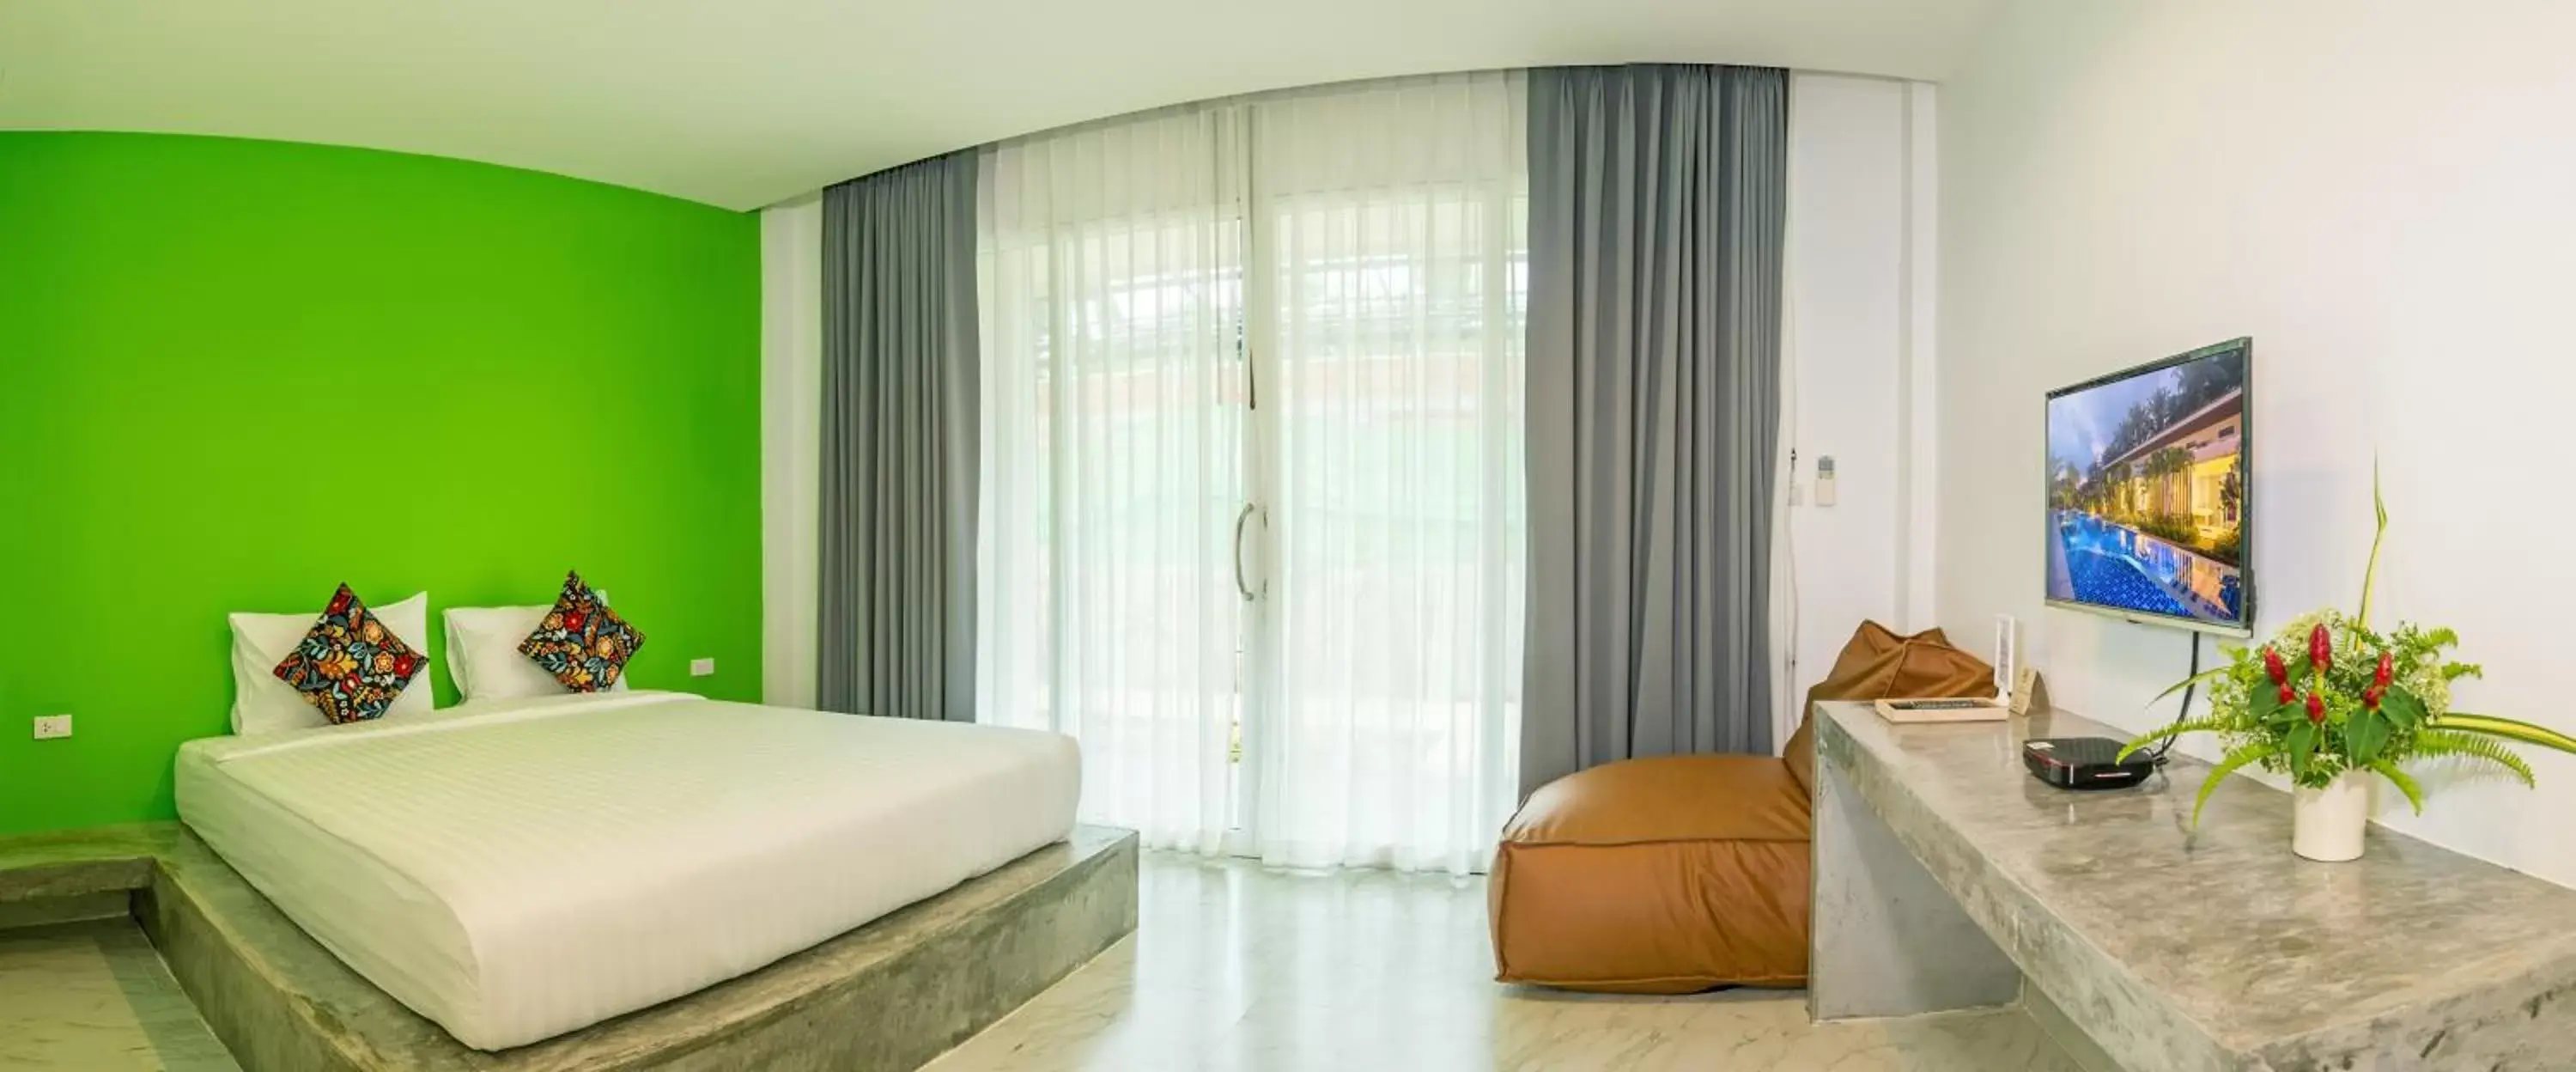 Day, Room Photo in The Fong Krabi resort